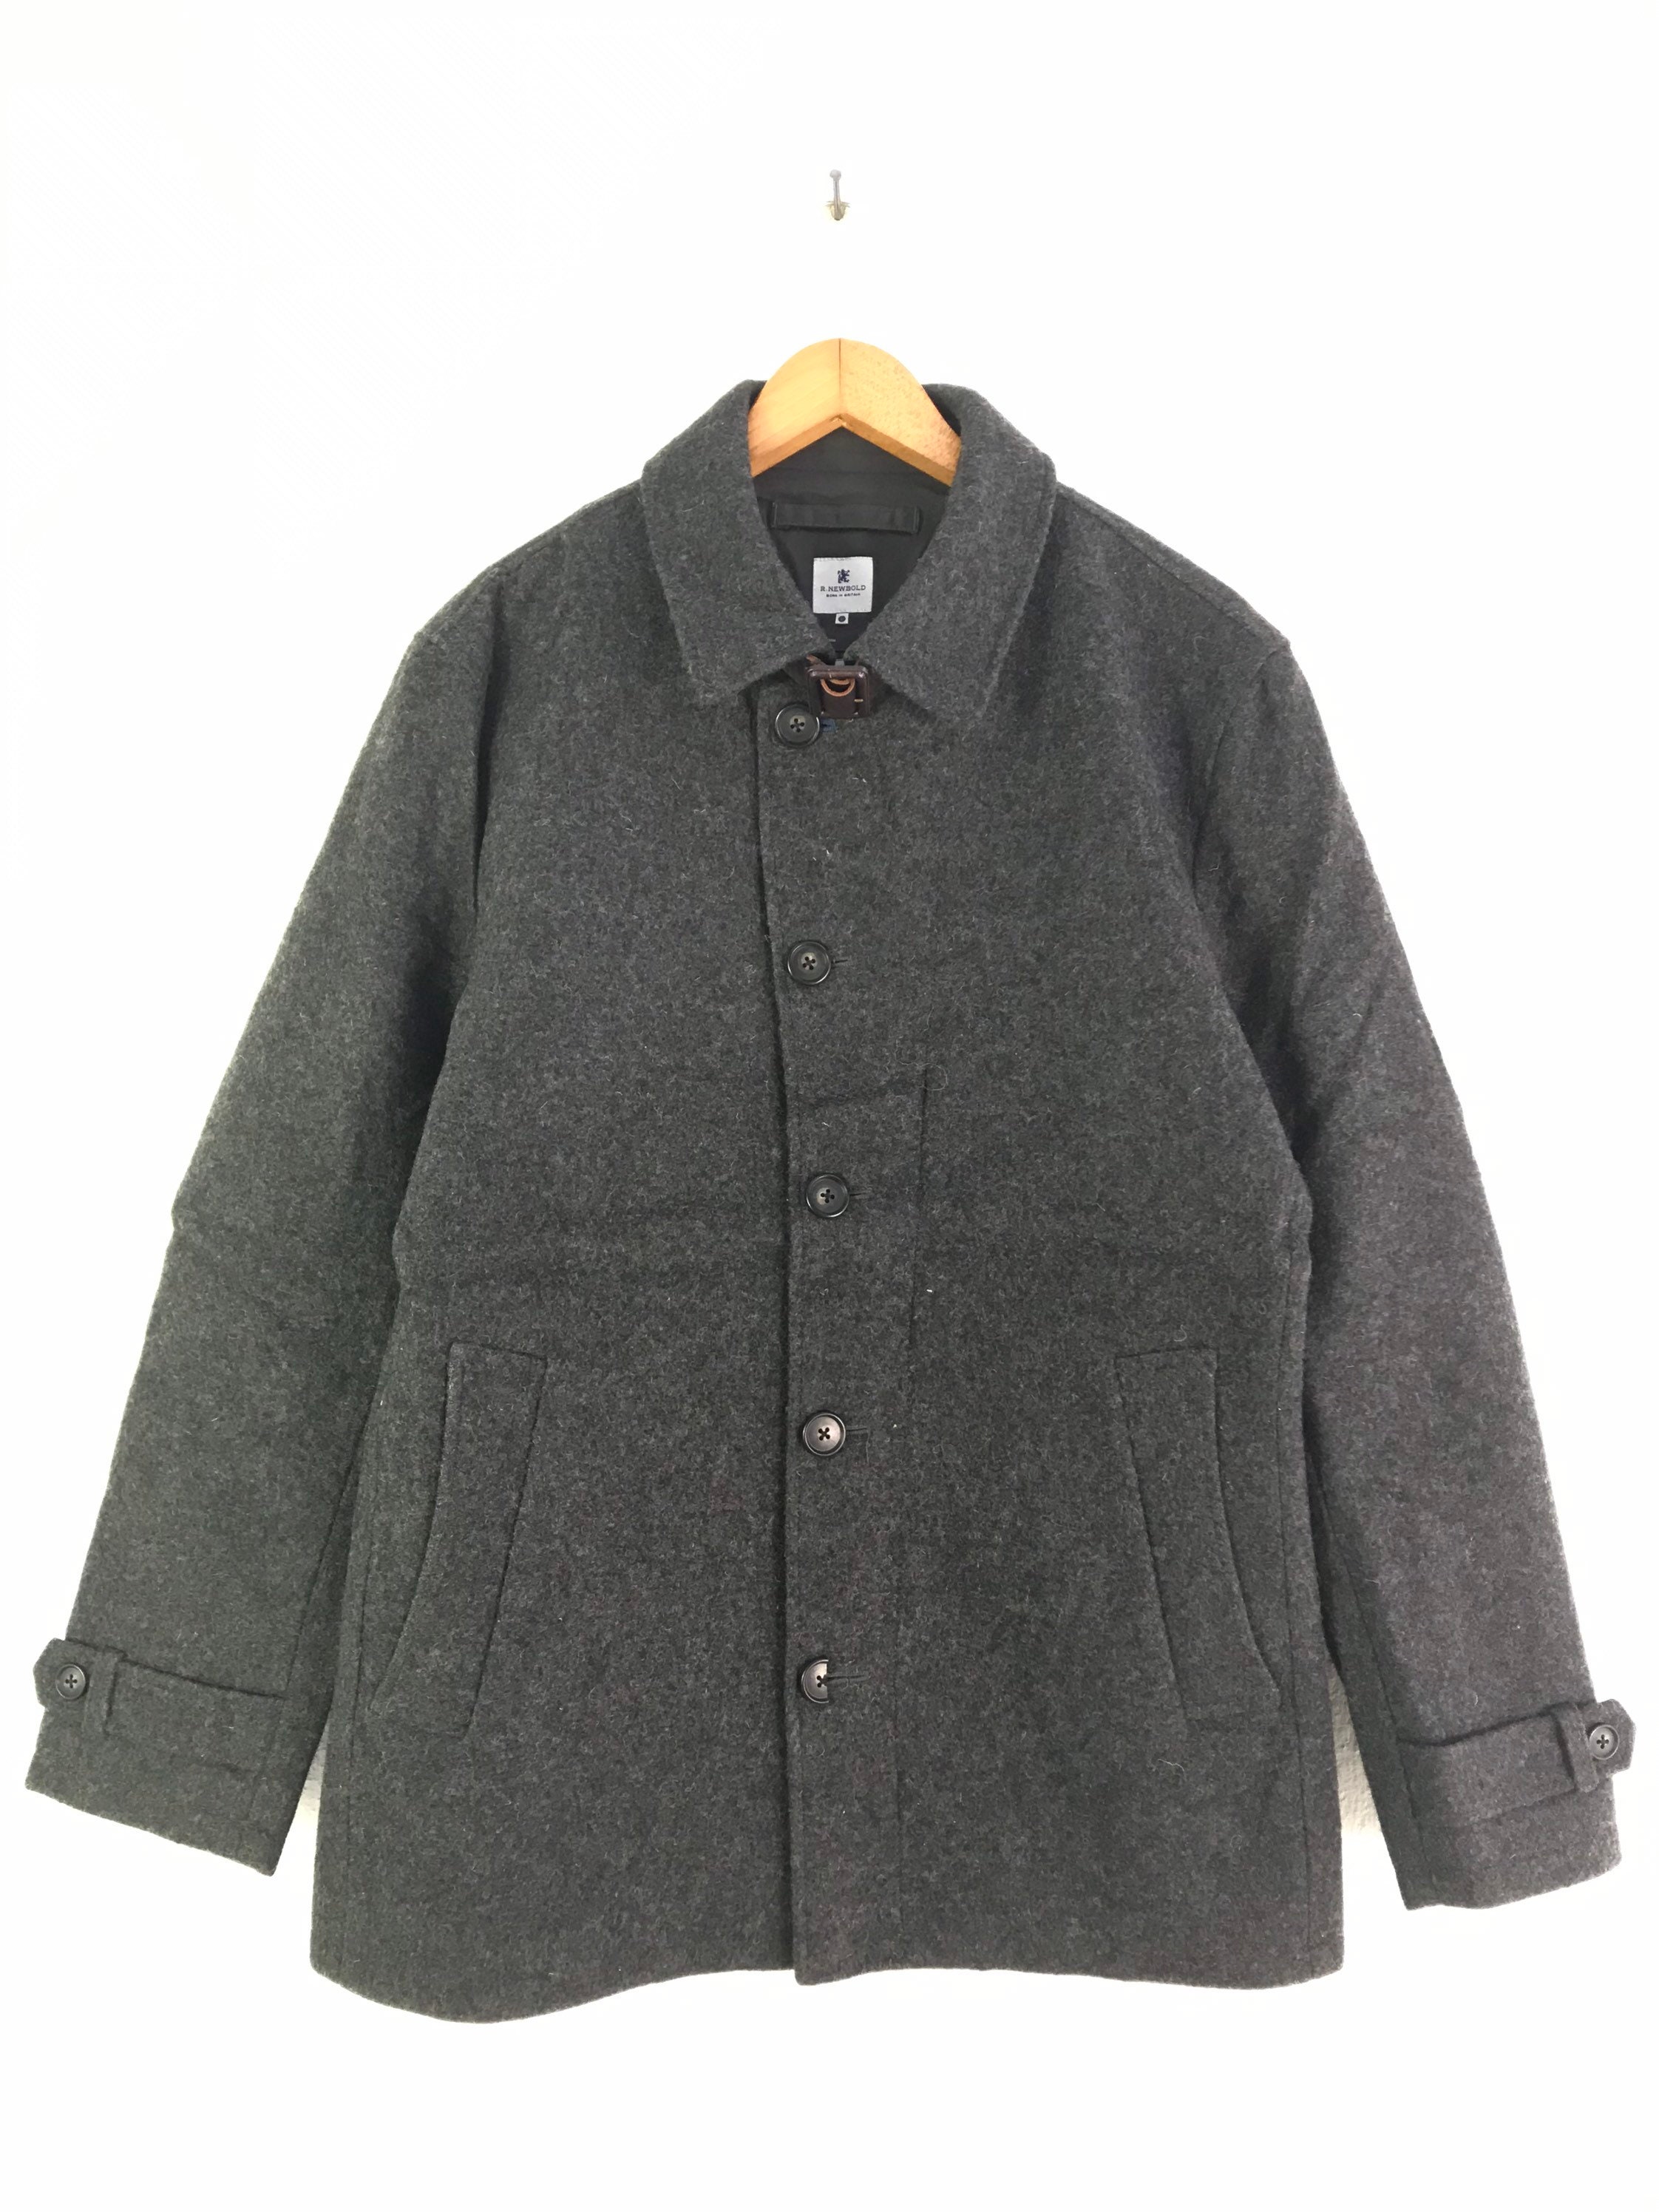 Japanese Brand R.newbold Wool Casual Jacket R. Newbold Heavy